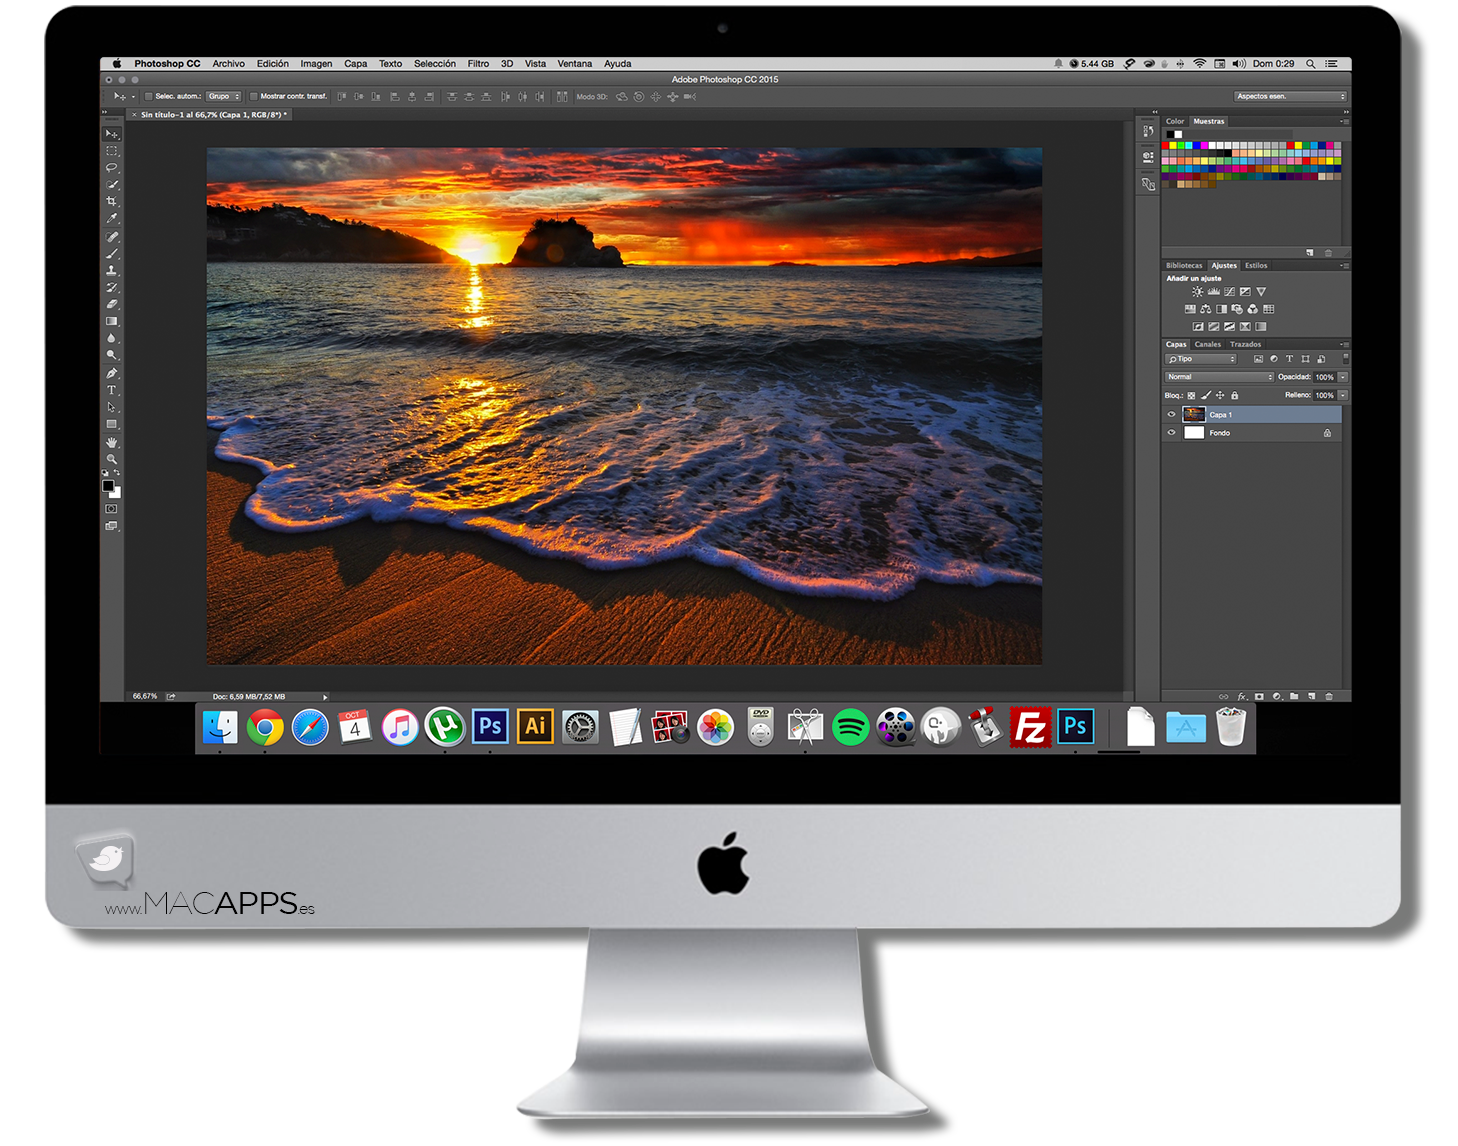 photoshop 2015 mac download